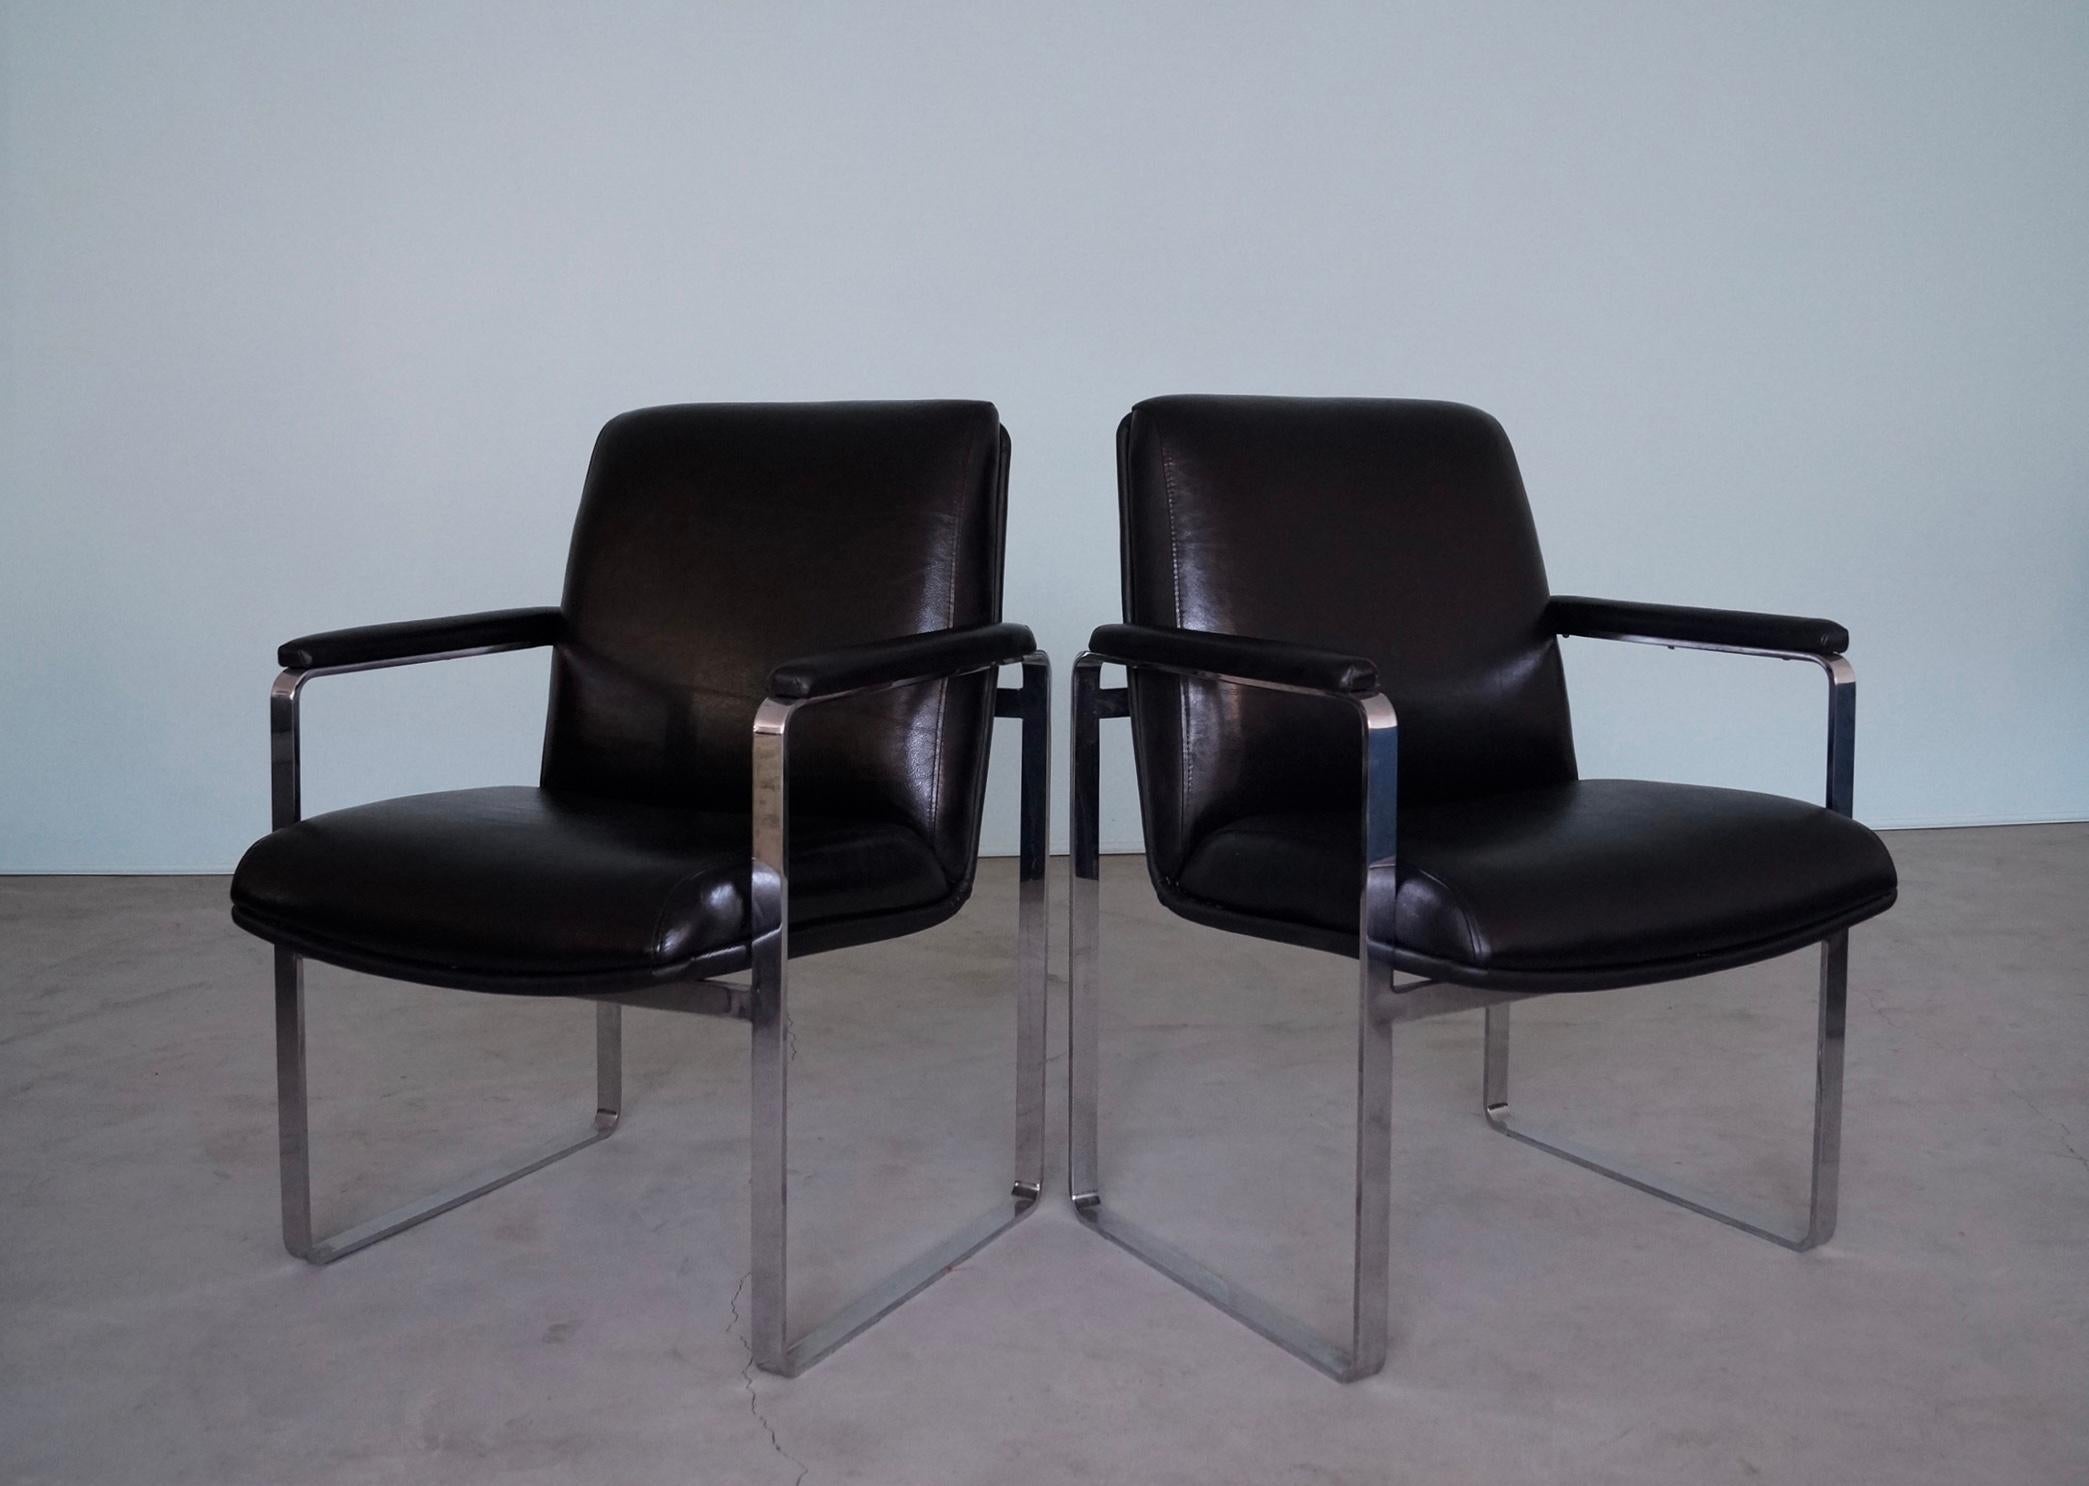 Mid-20th Century 1960's Mid-Century Modern Flat Bar Chrome & Black Leather Armchairs - a Pair For Sale